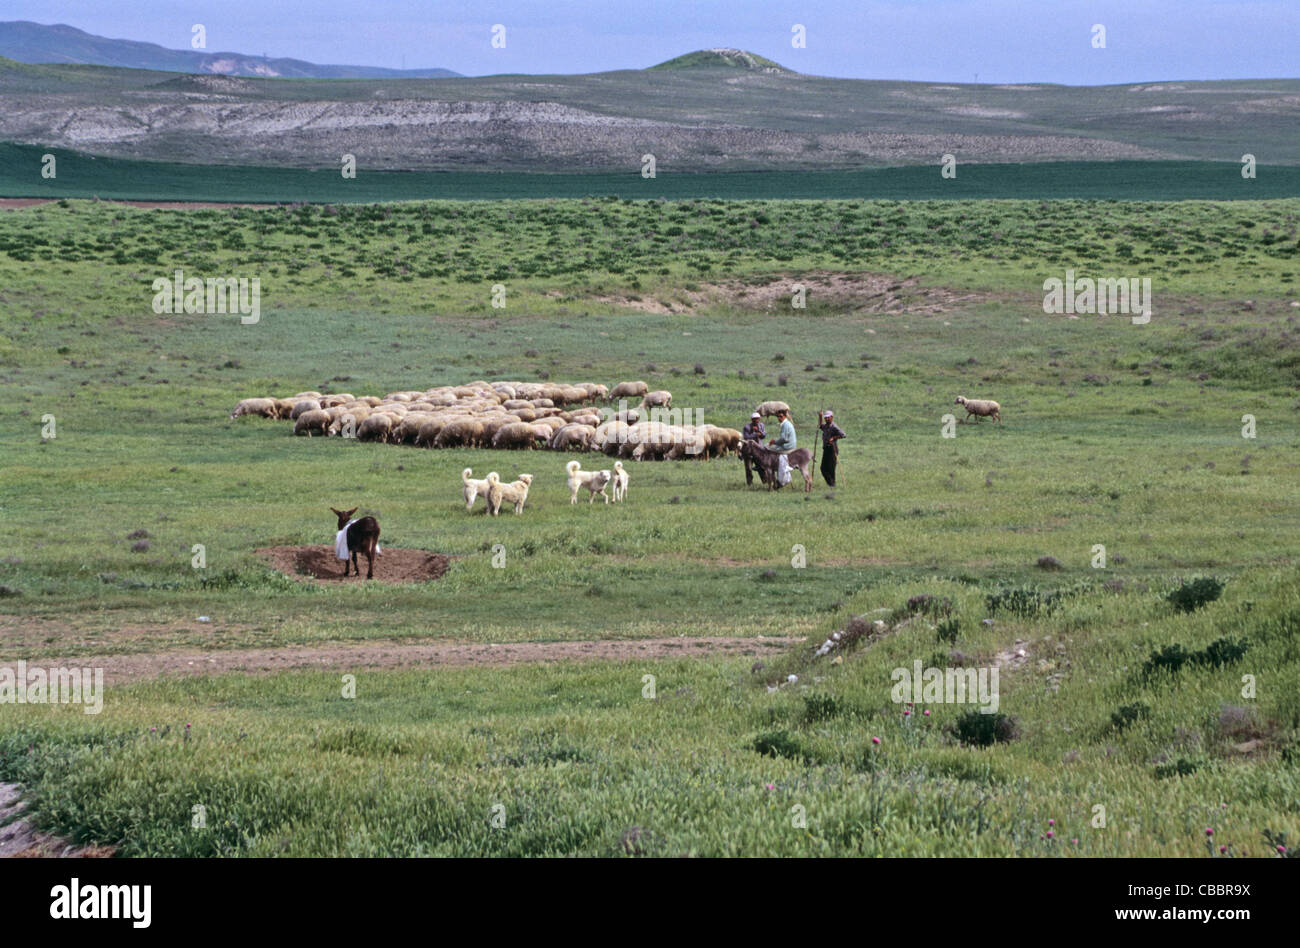 Sheep and shepherds, Midas' tumulus in the background, Gordion, Turkey 000516 0501 Stock Photo